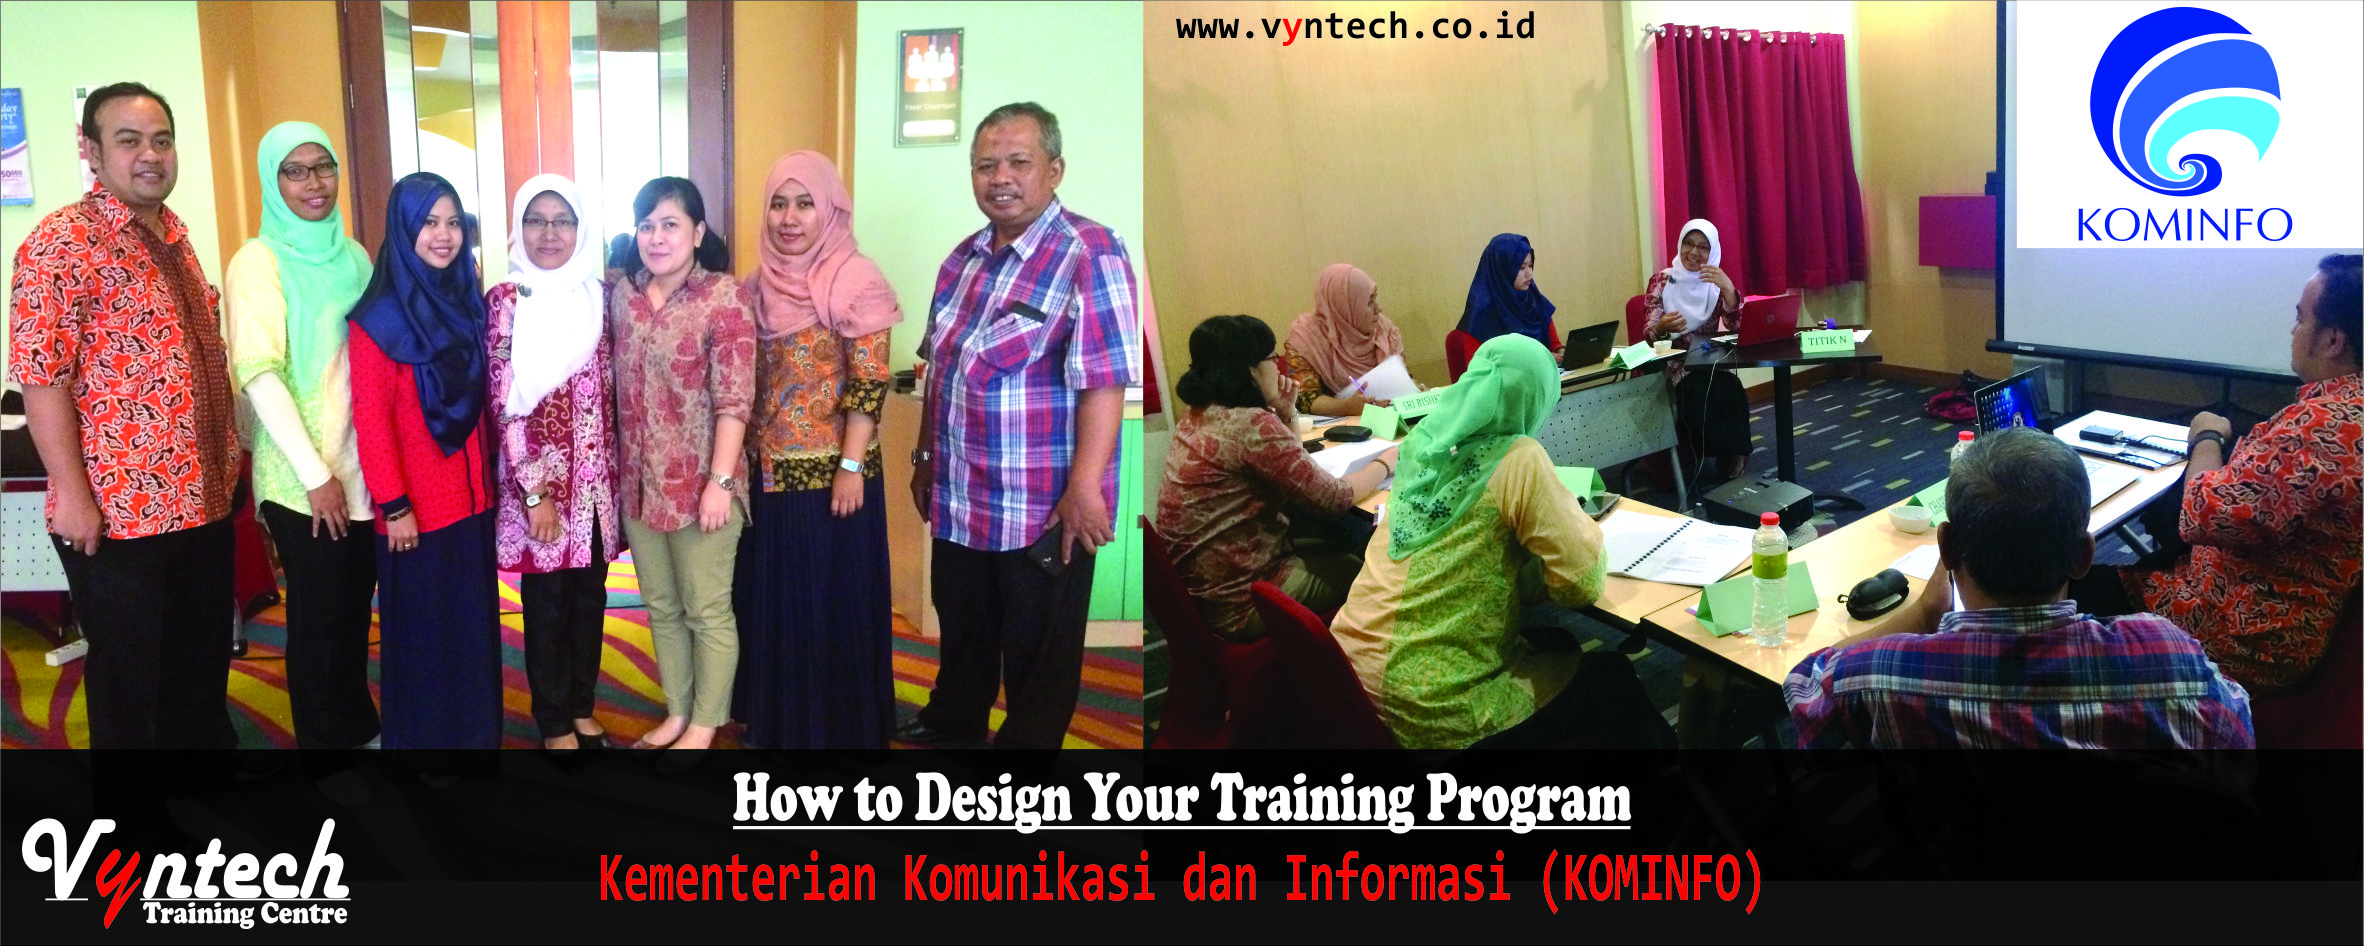 20160608 Training How to Design Your Training Program - Kementerian Komunikasi dan Informasi (KOMINFO)